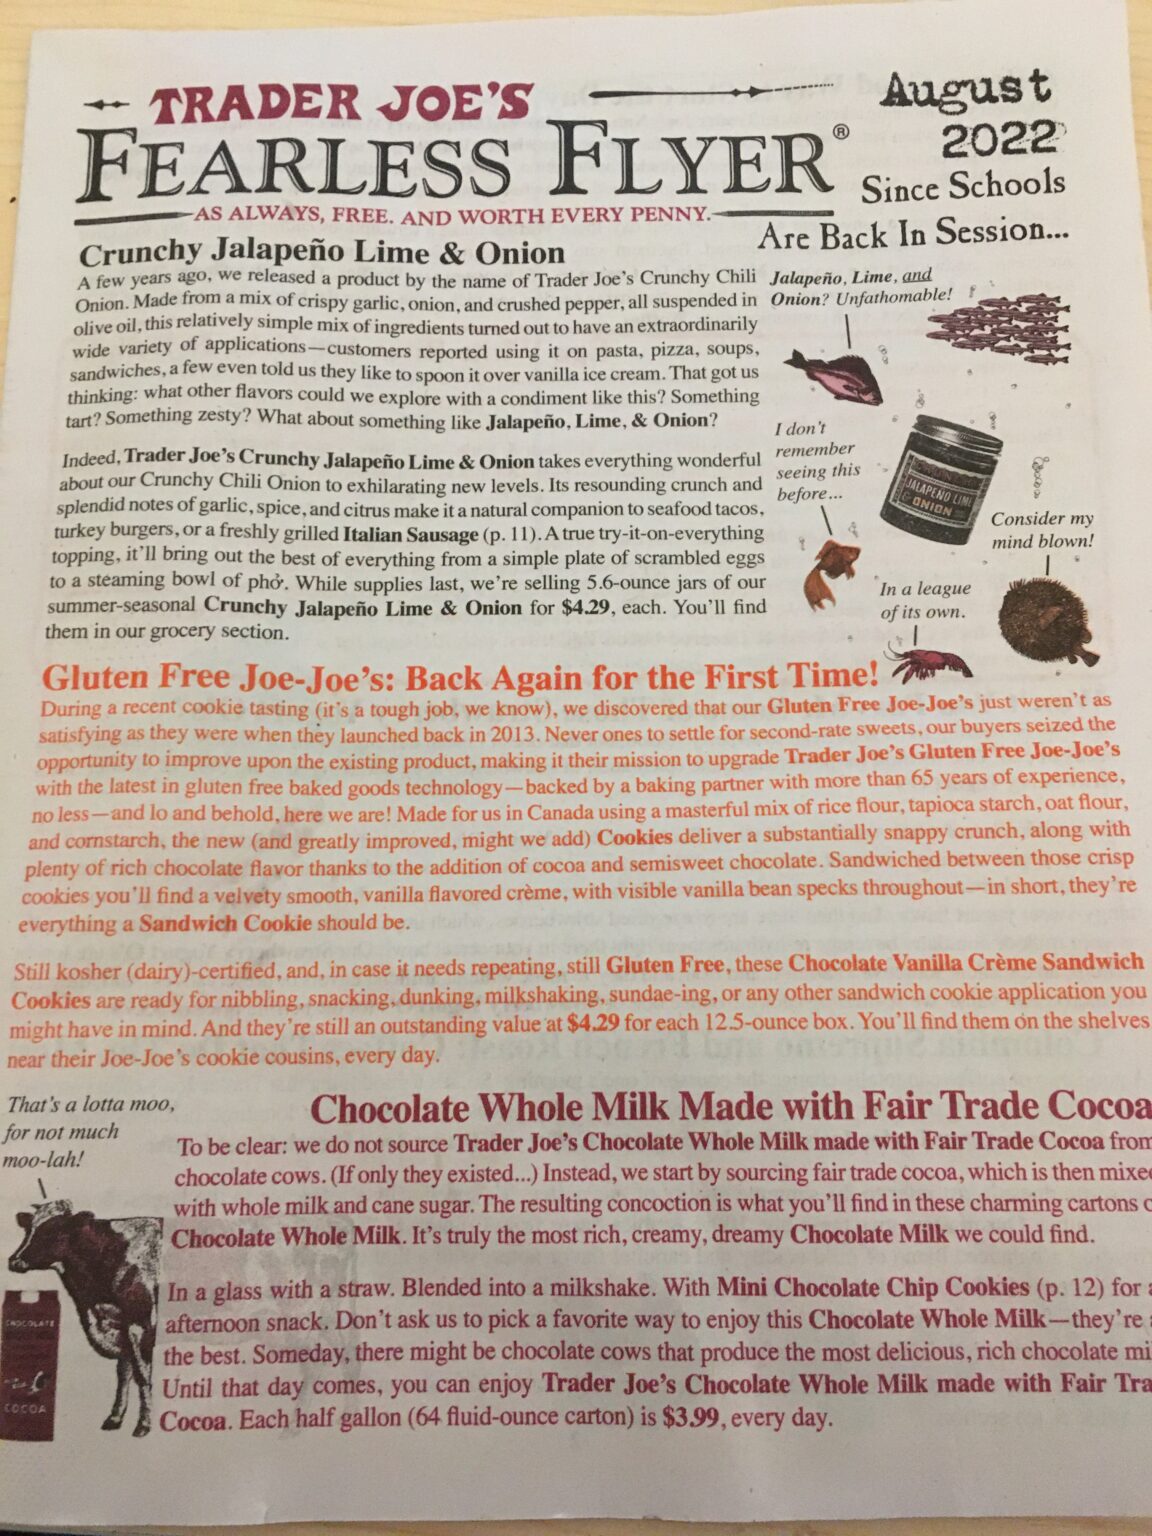 Trader Joe's Weekly Ad August 2022, Fearless Flyer Trader Joe's Reviews